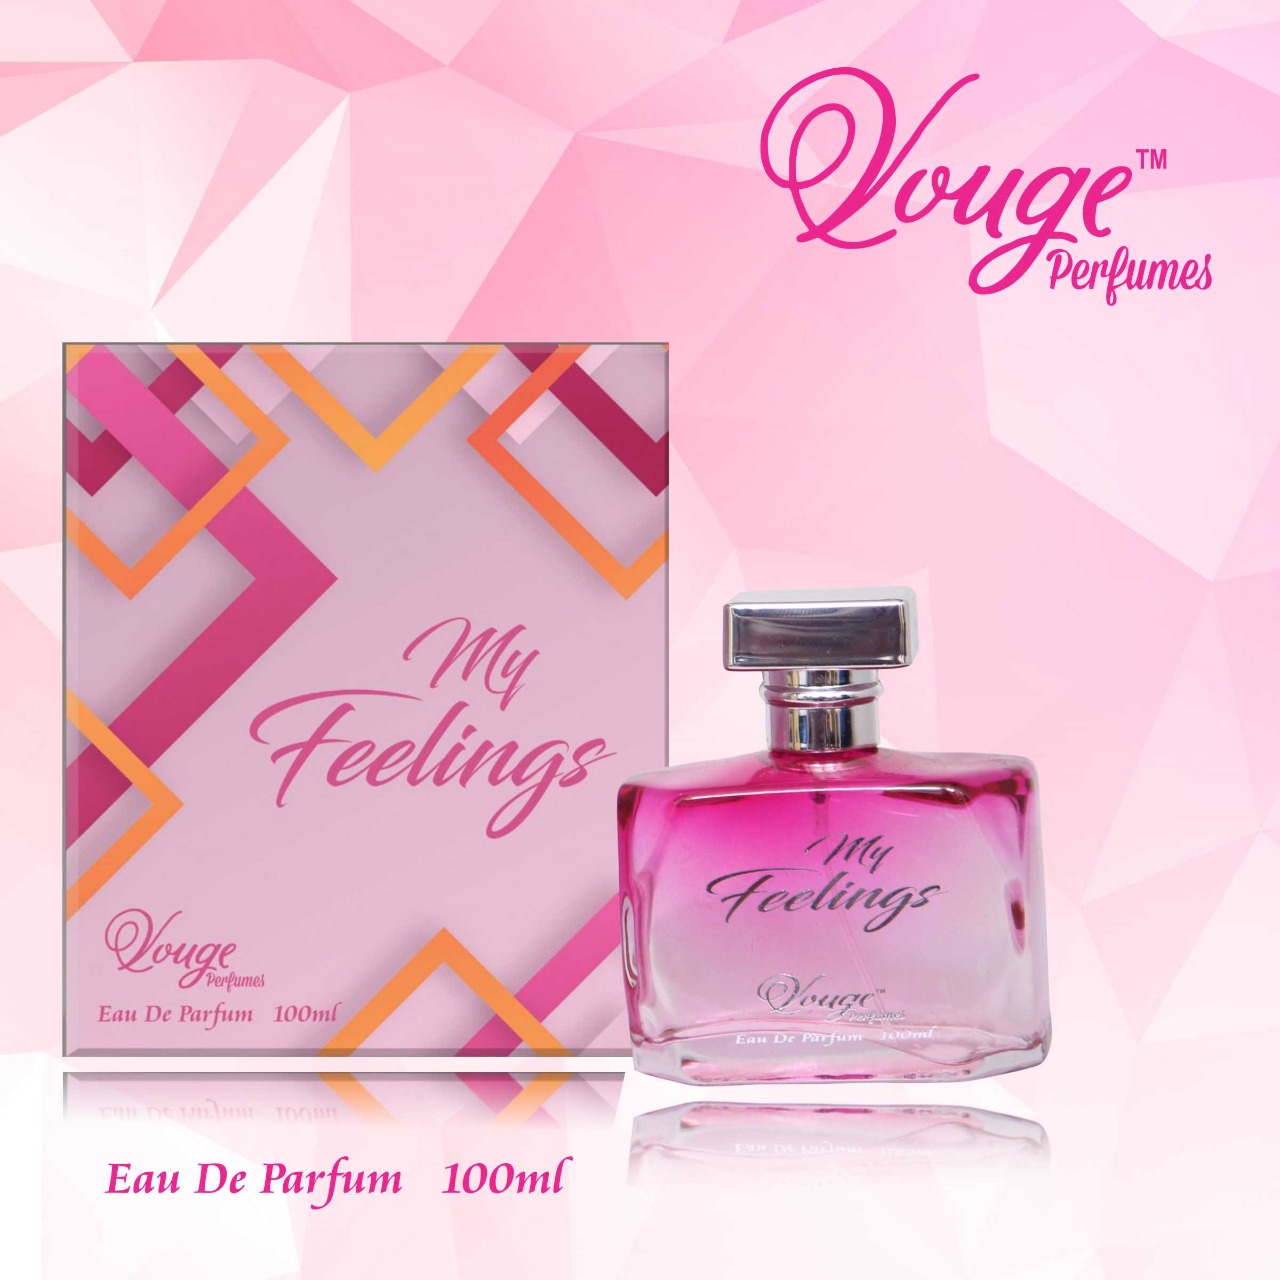 Vouge Perfume - My Feelings from Alminar fragnance